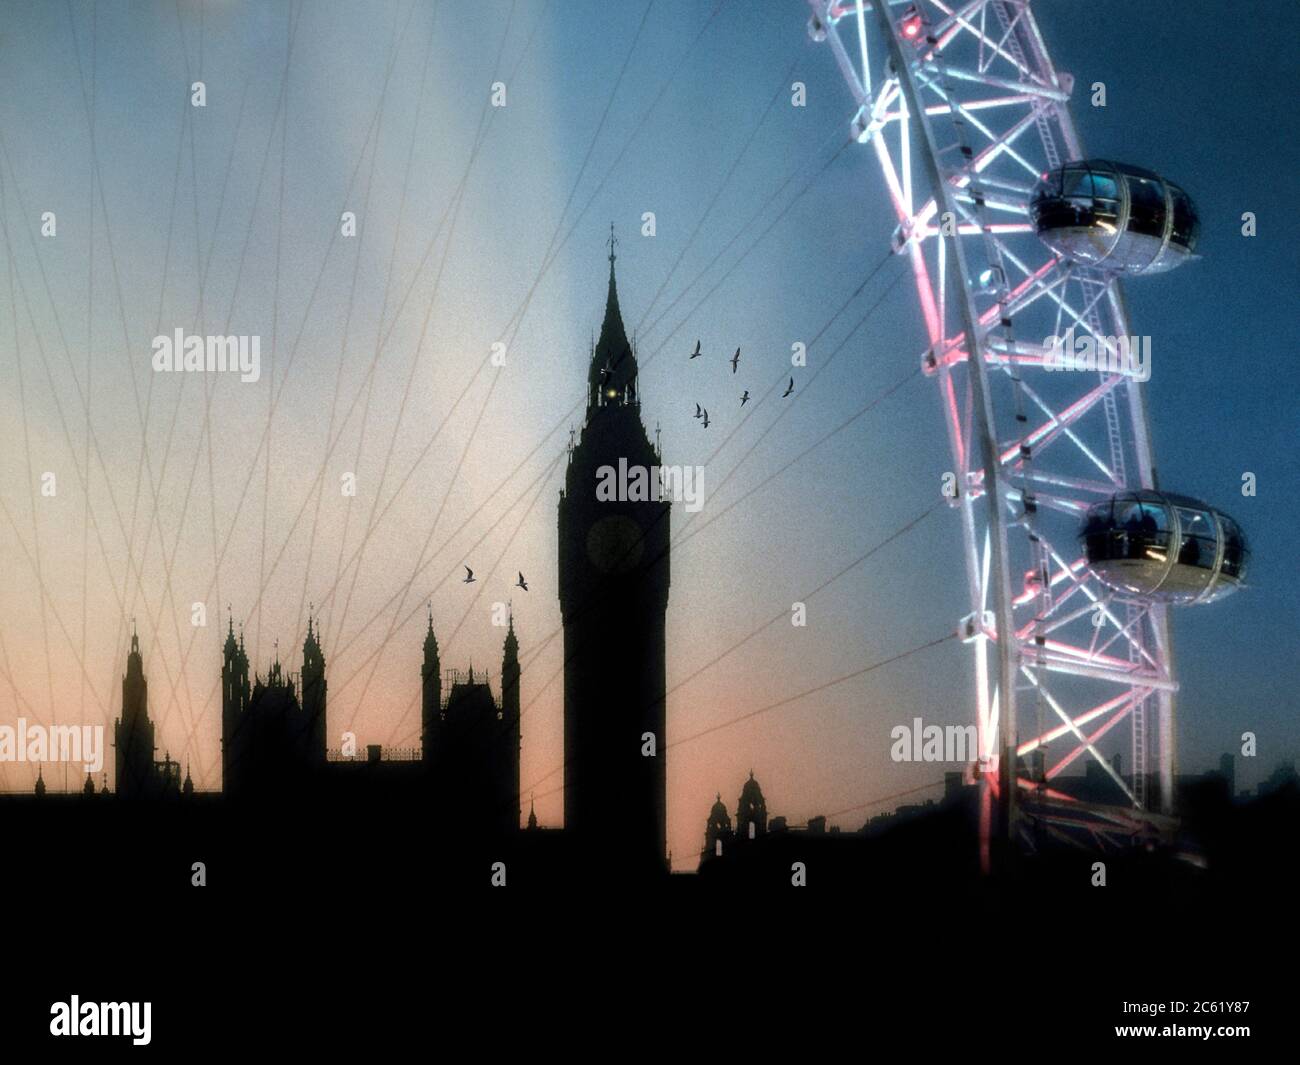 GB - LONDRA: Parlamento a Westminster e parte della London Eye Ferris Wheel Foto Stock